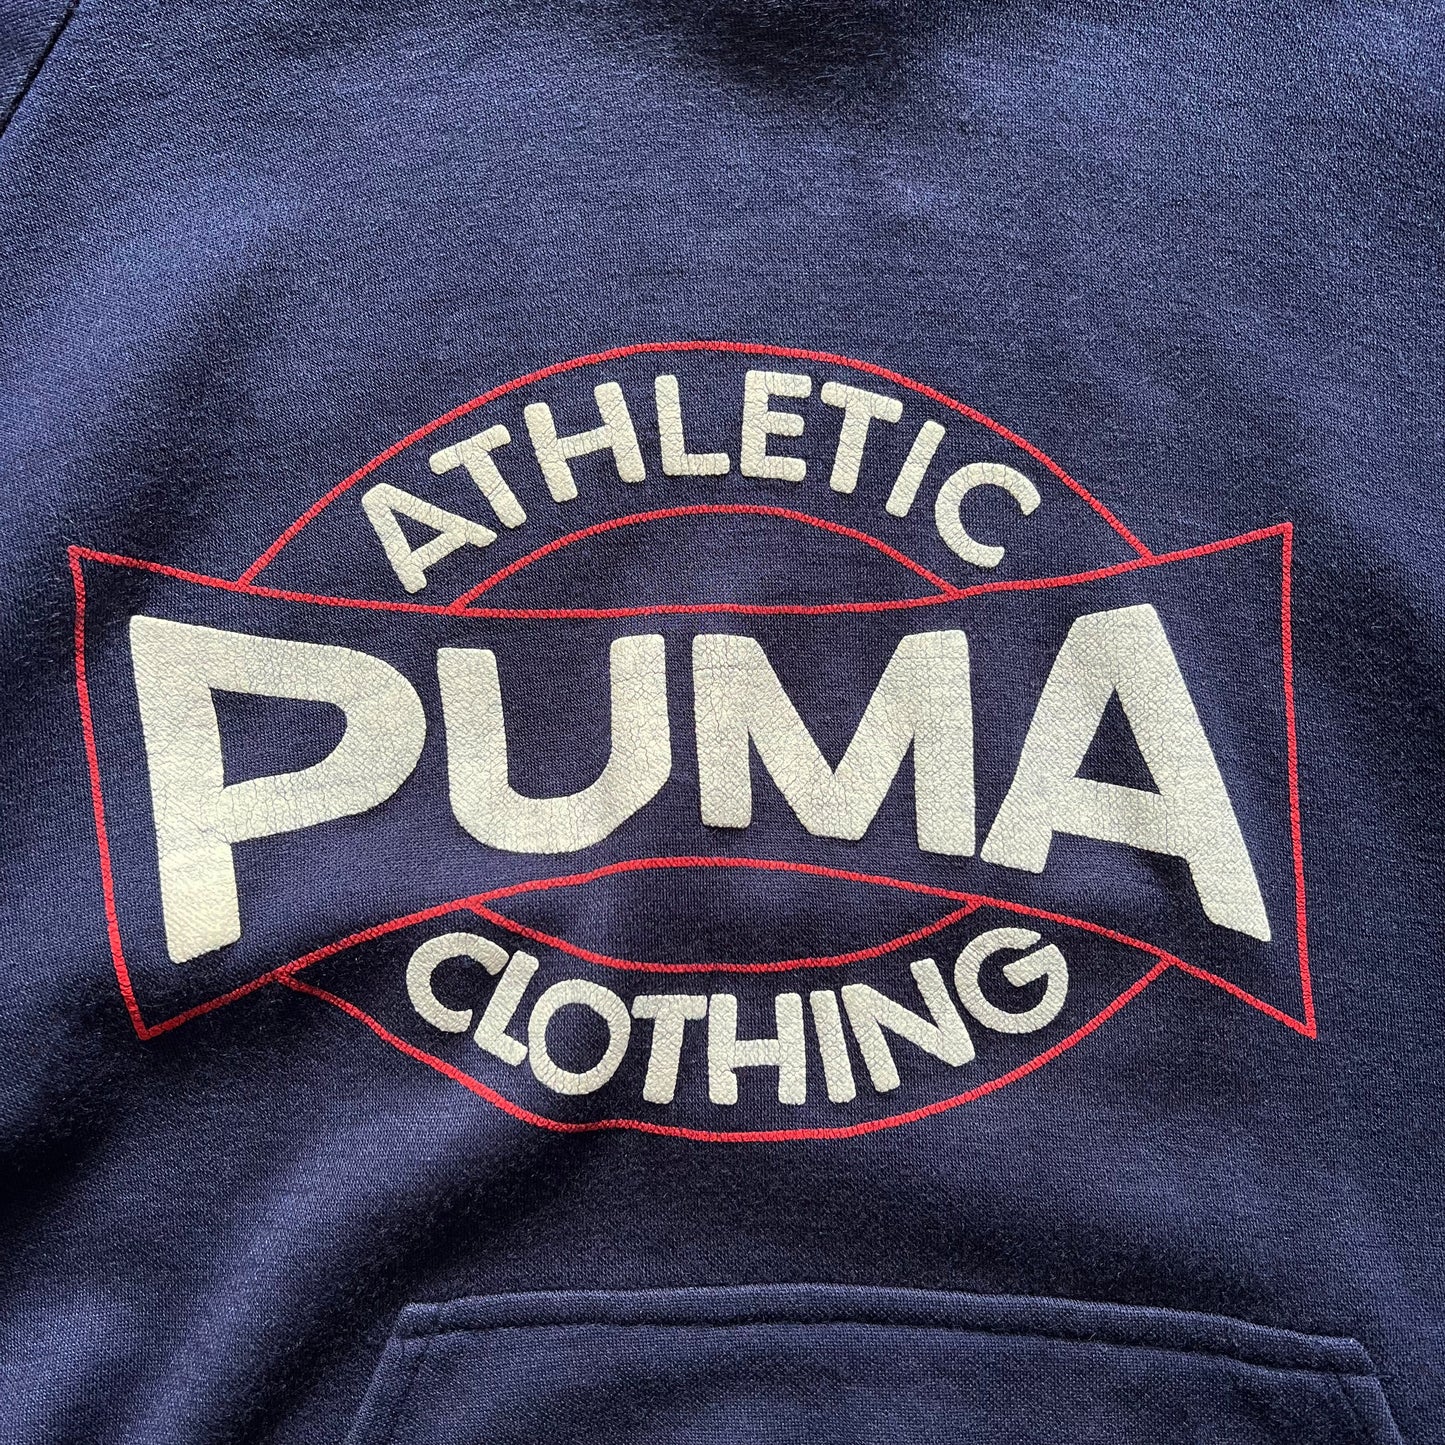 80's PUMA "ATHLETIC CLOTHING" HOODIE